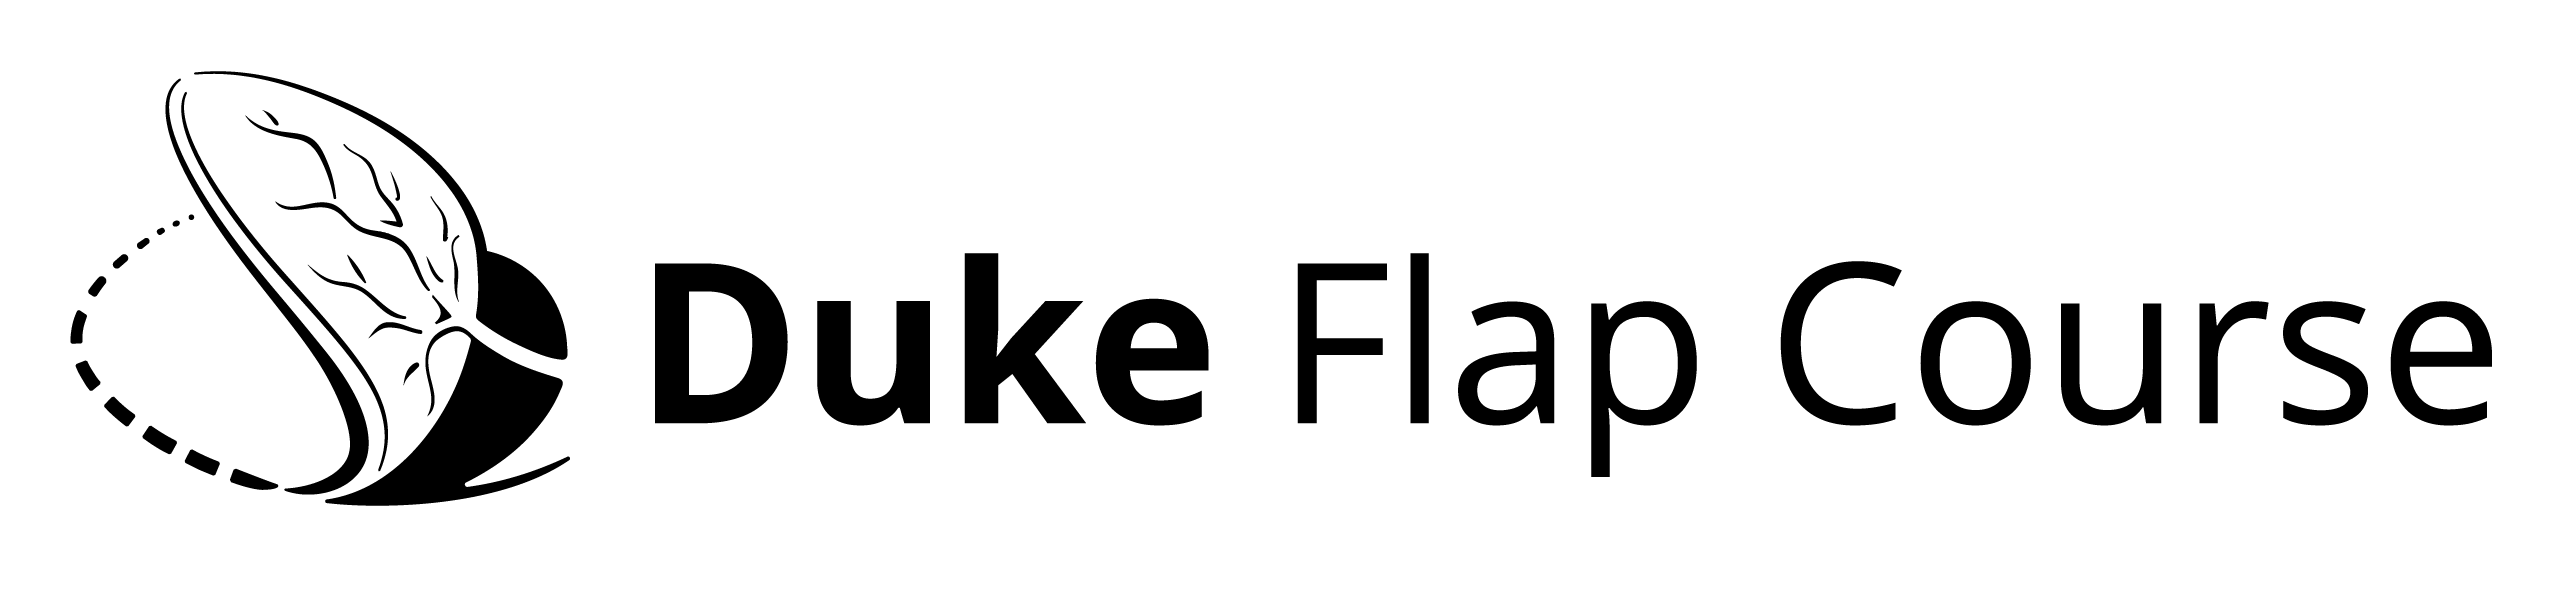 Duke Flap Course logo